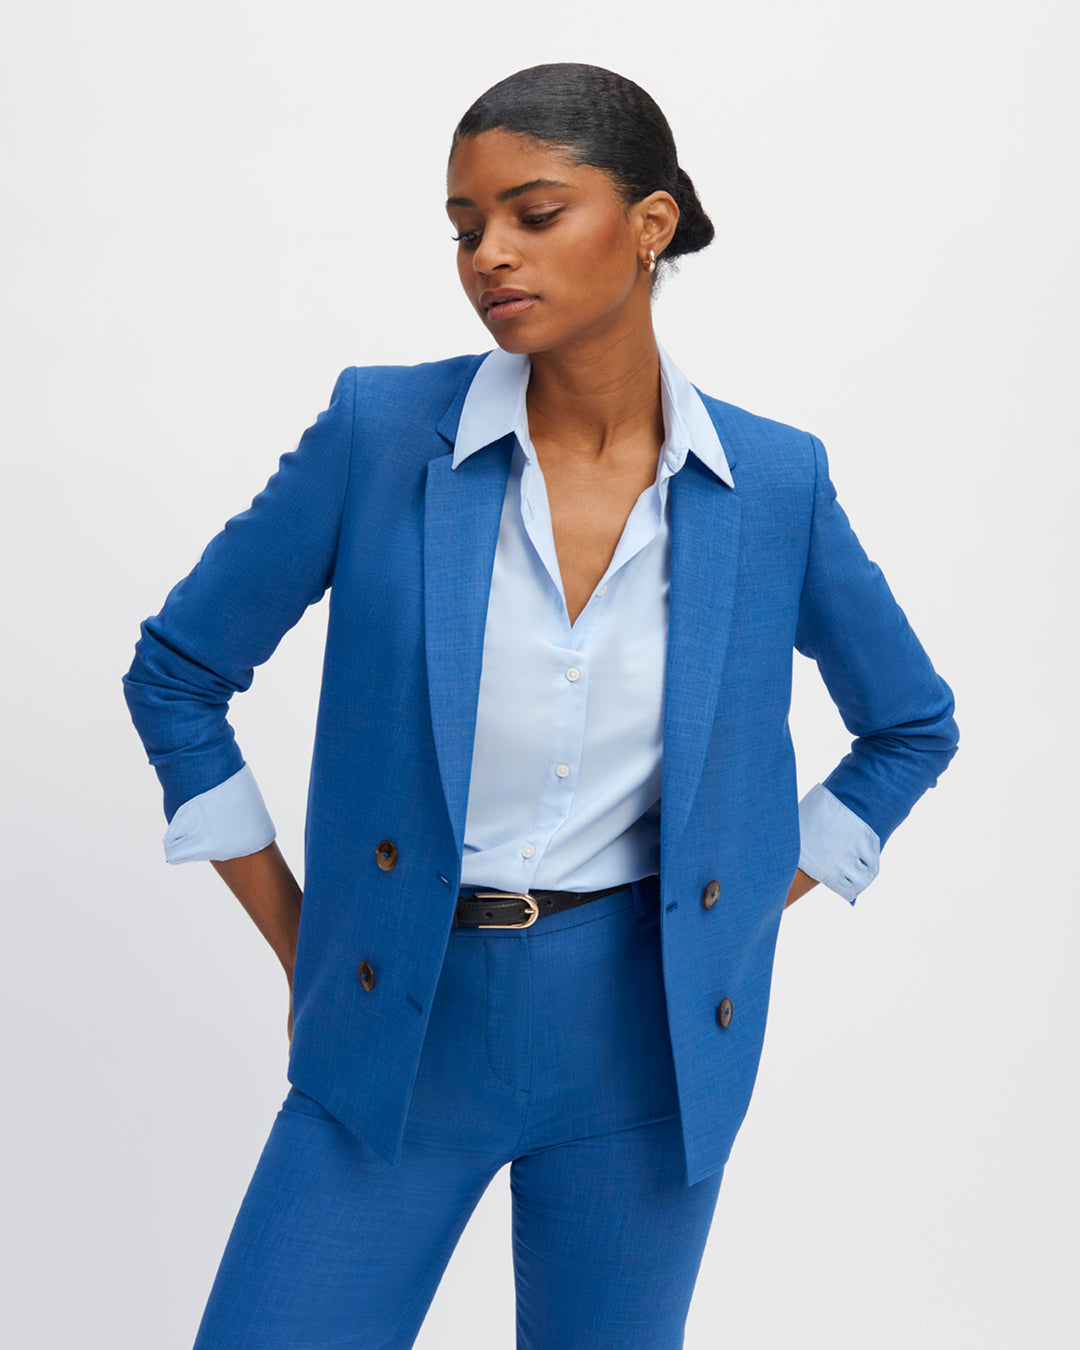 jacket-blue-azur-cut-right-crossed-double-button-collar-suit-entirely-lined-17H10-suit-for-women-paris-